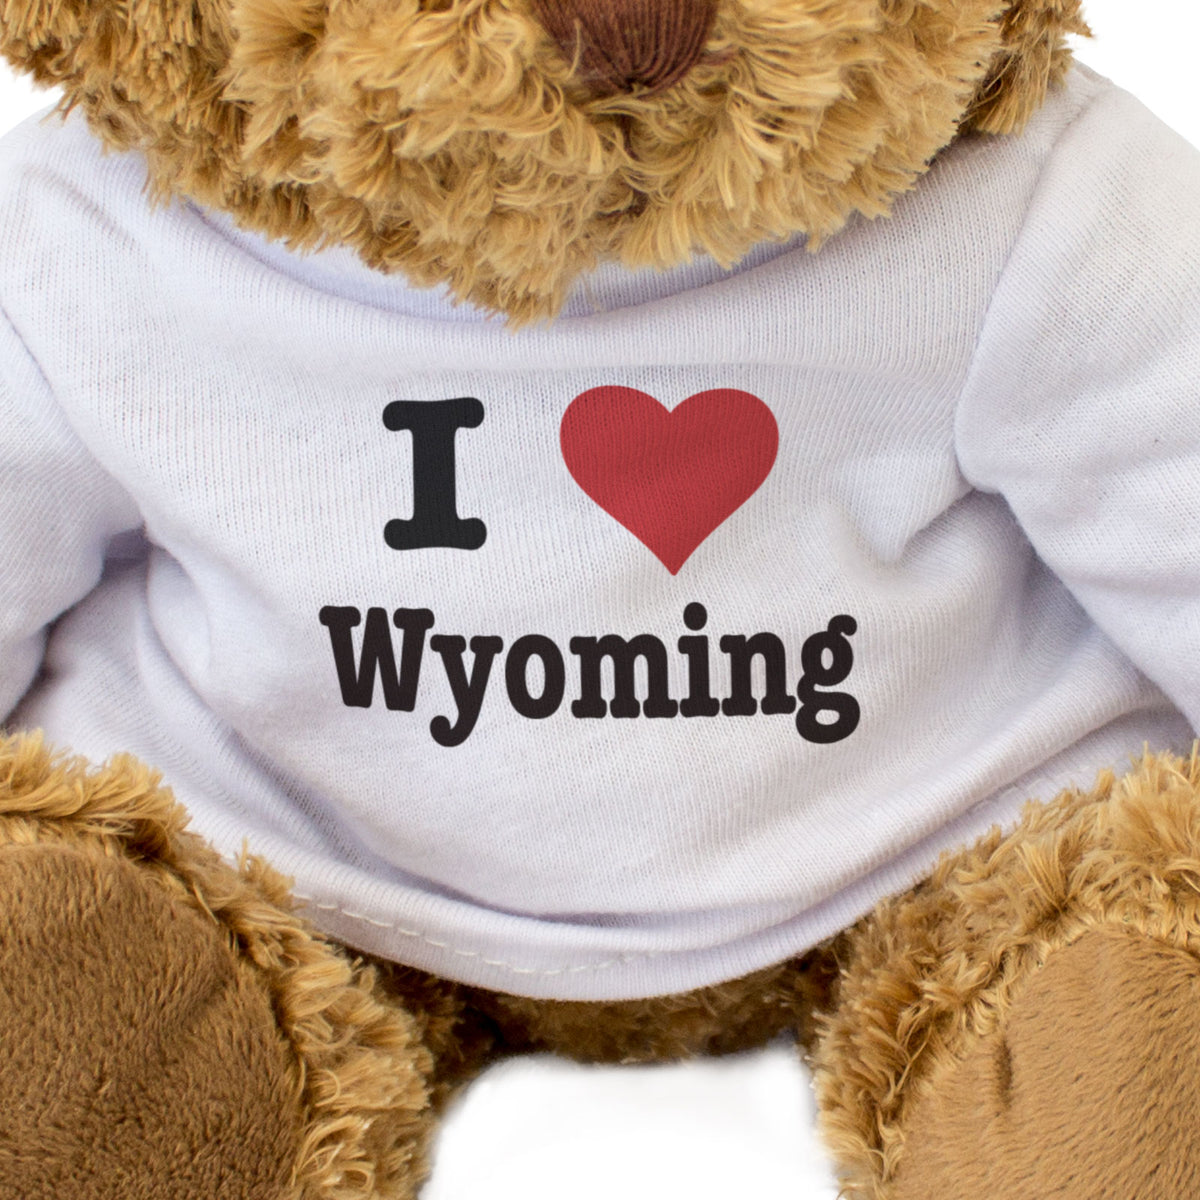 I Love Wyoming - Teddy Bear - Gift Present